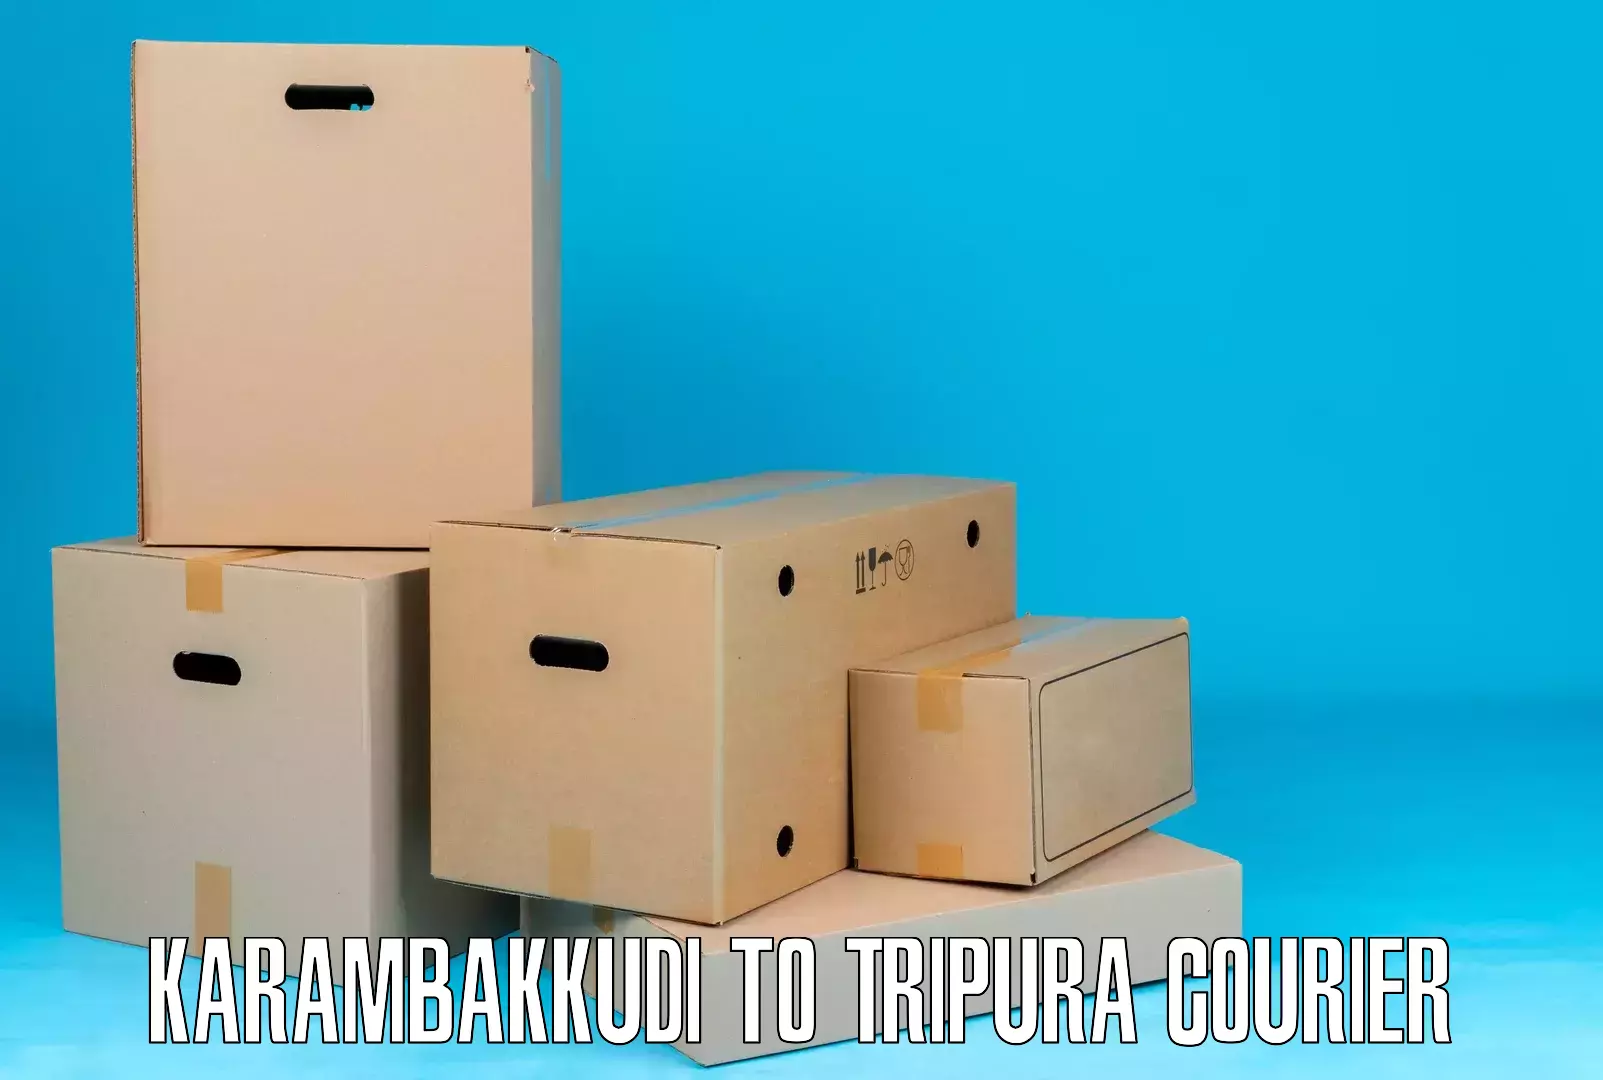 Specialized shipment handling Karambakkudi to Aambasa